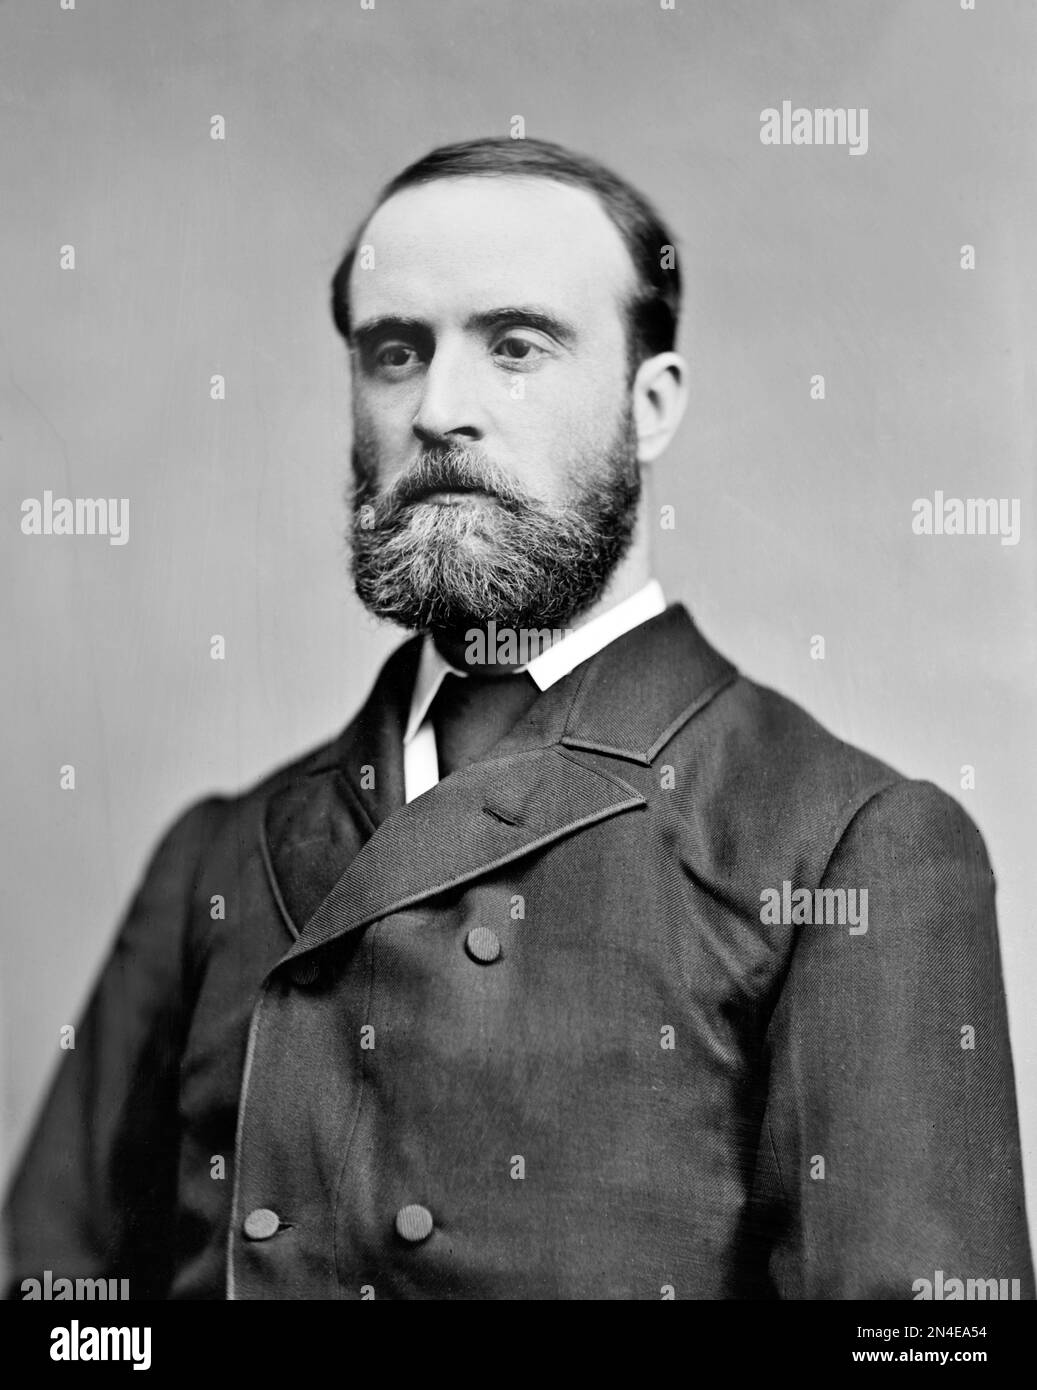 Charles Stewart Parnell. Portrait of the Irish Nationalist politician, Charles Stewart Parnell (1846-1891) by Mathew Brady, c. 1870-80 Stock Photo